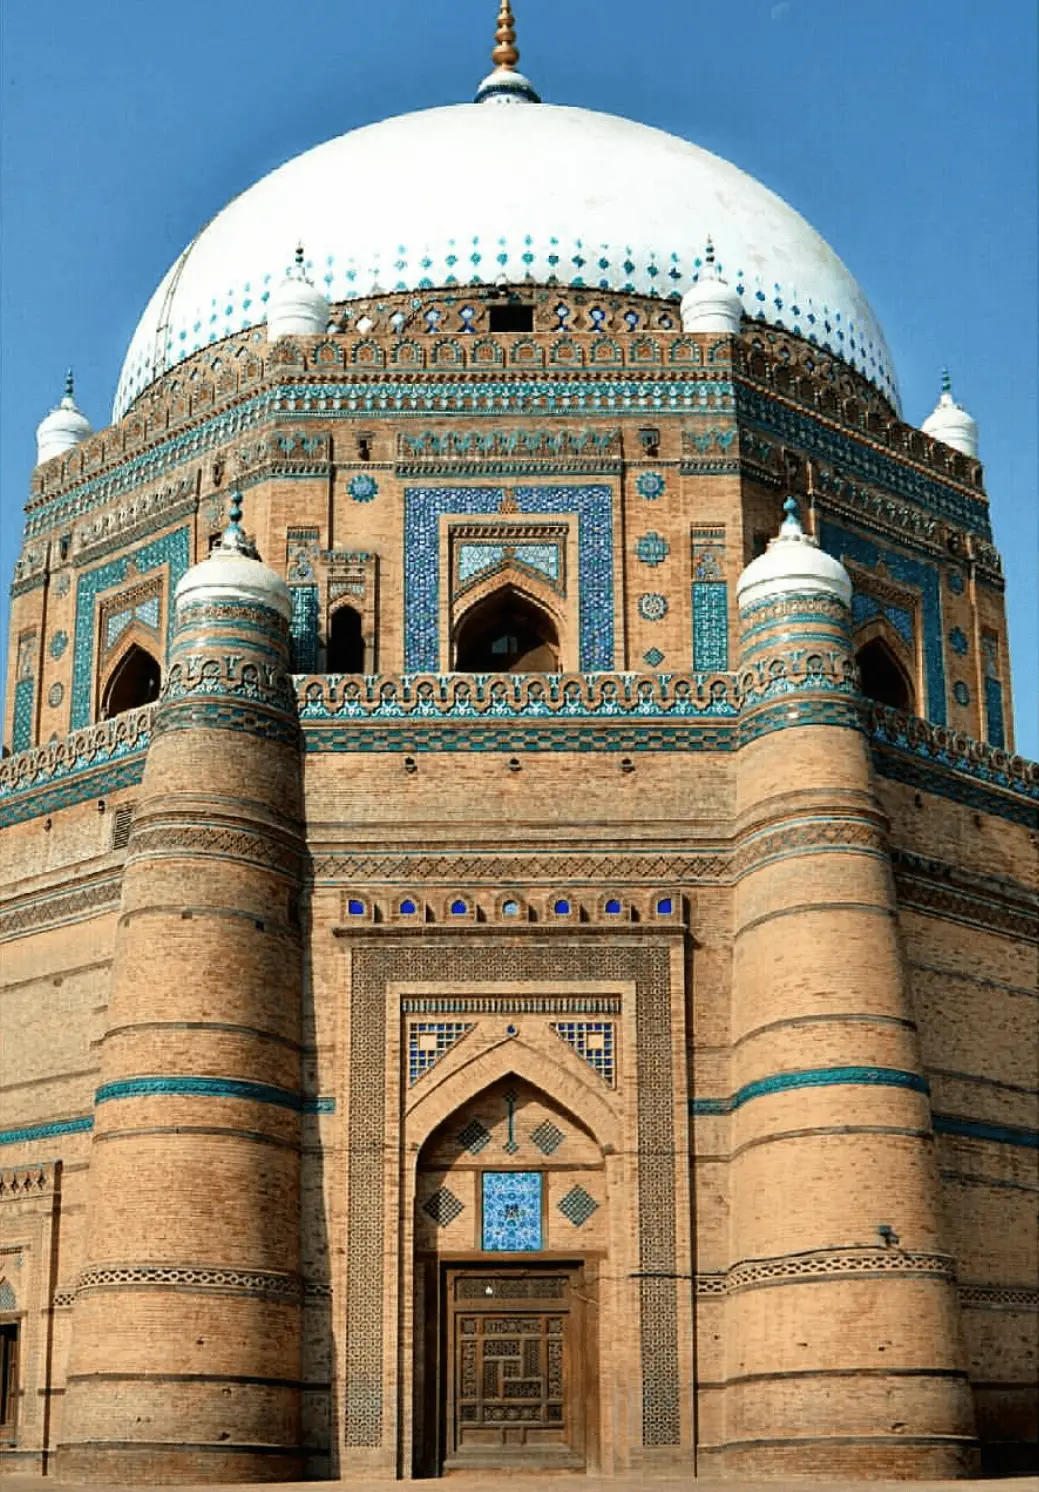 Tomb of Shah Rukn-e-Alam in Multan, Pakistan